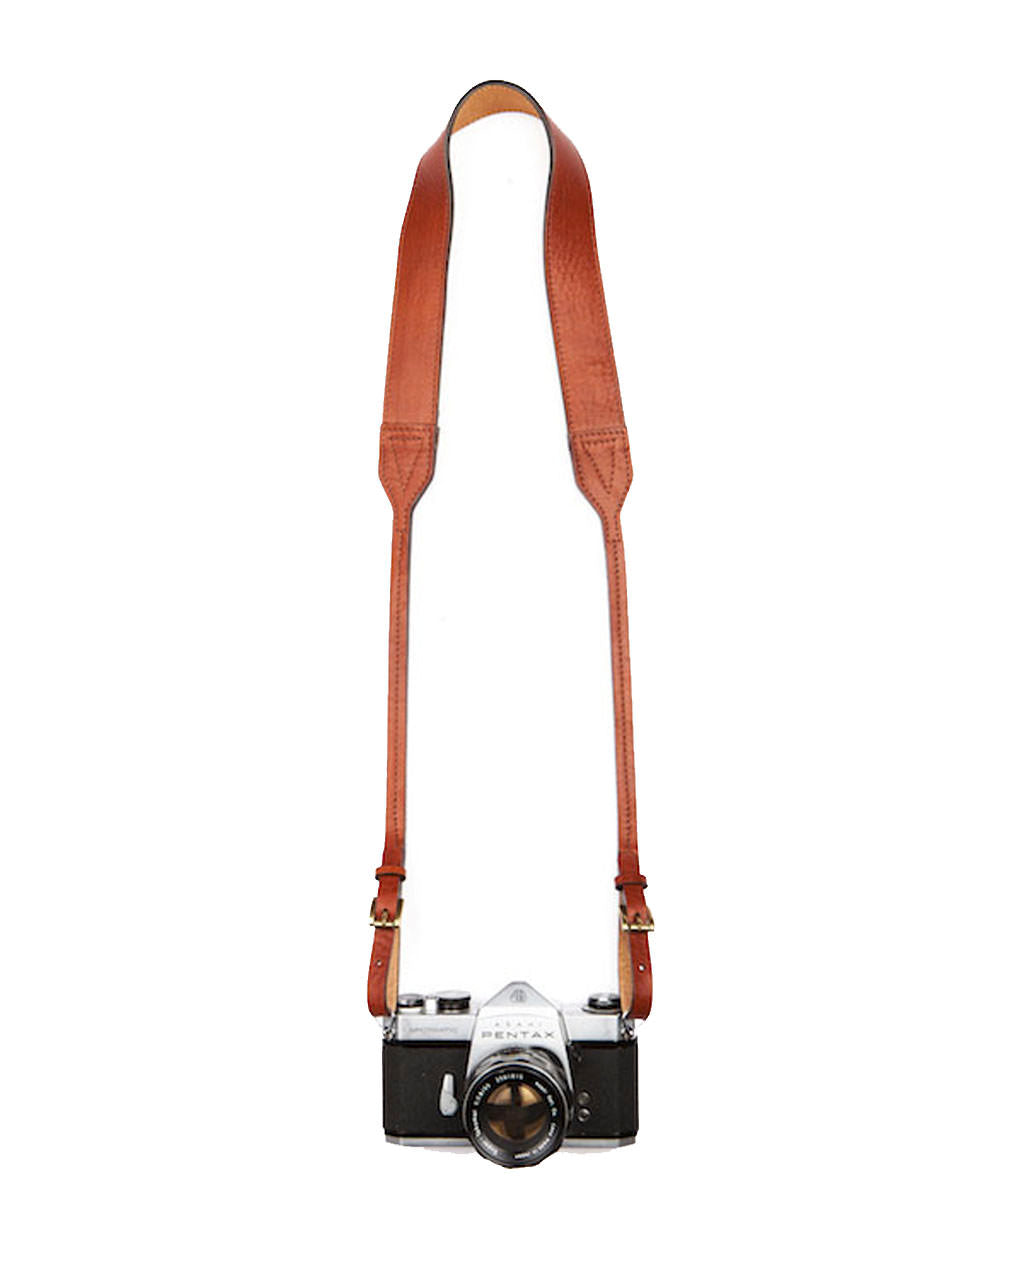 Leather camera strap on camera